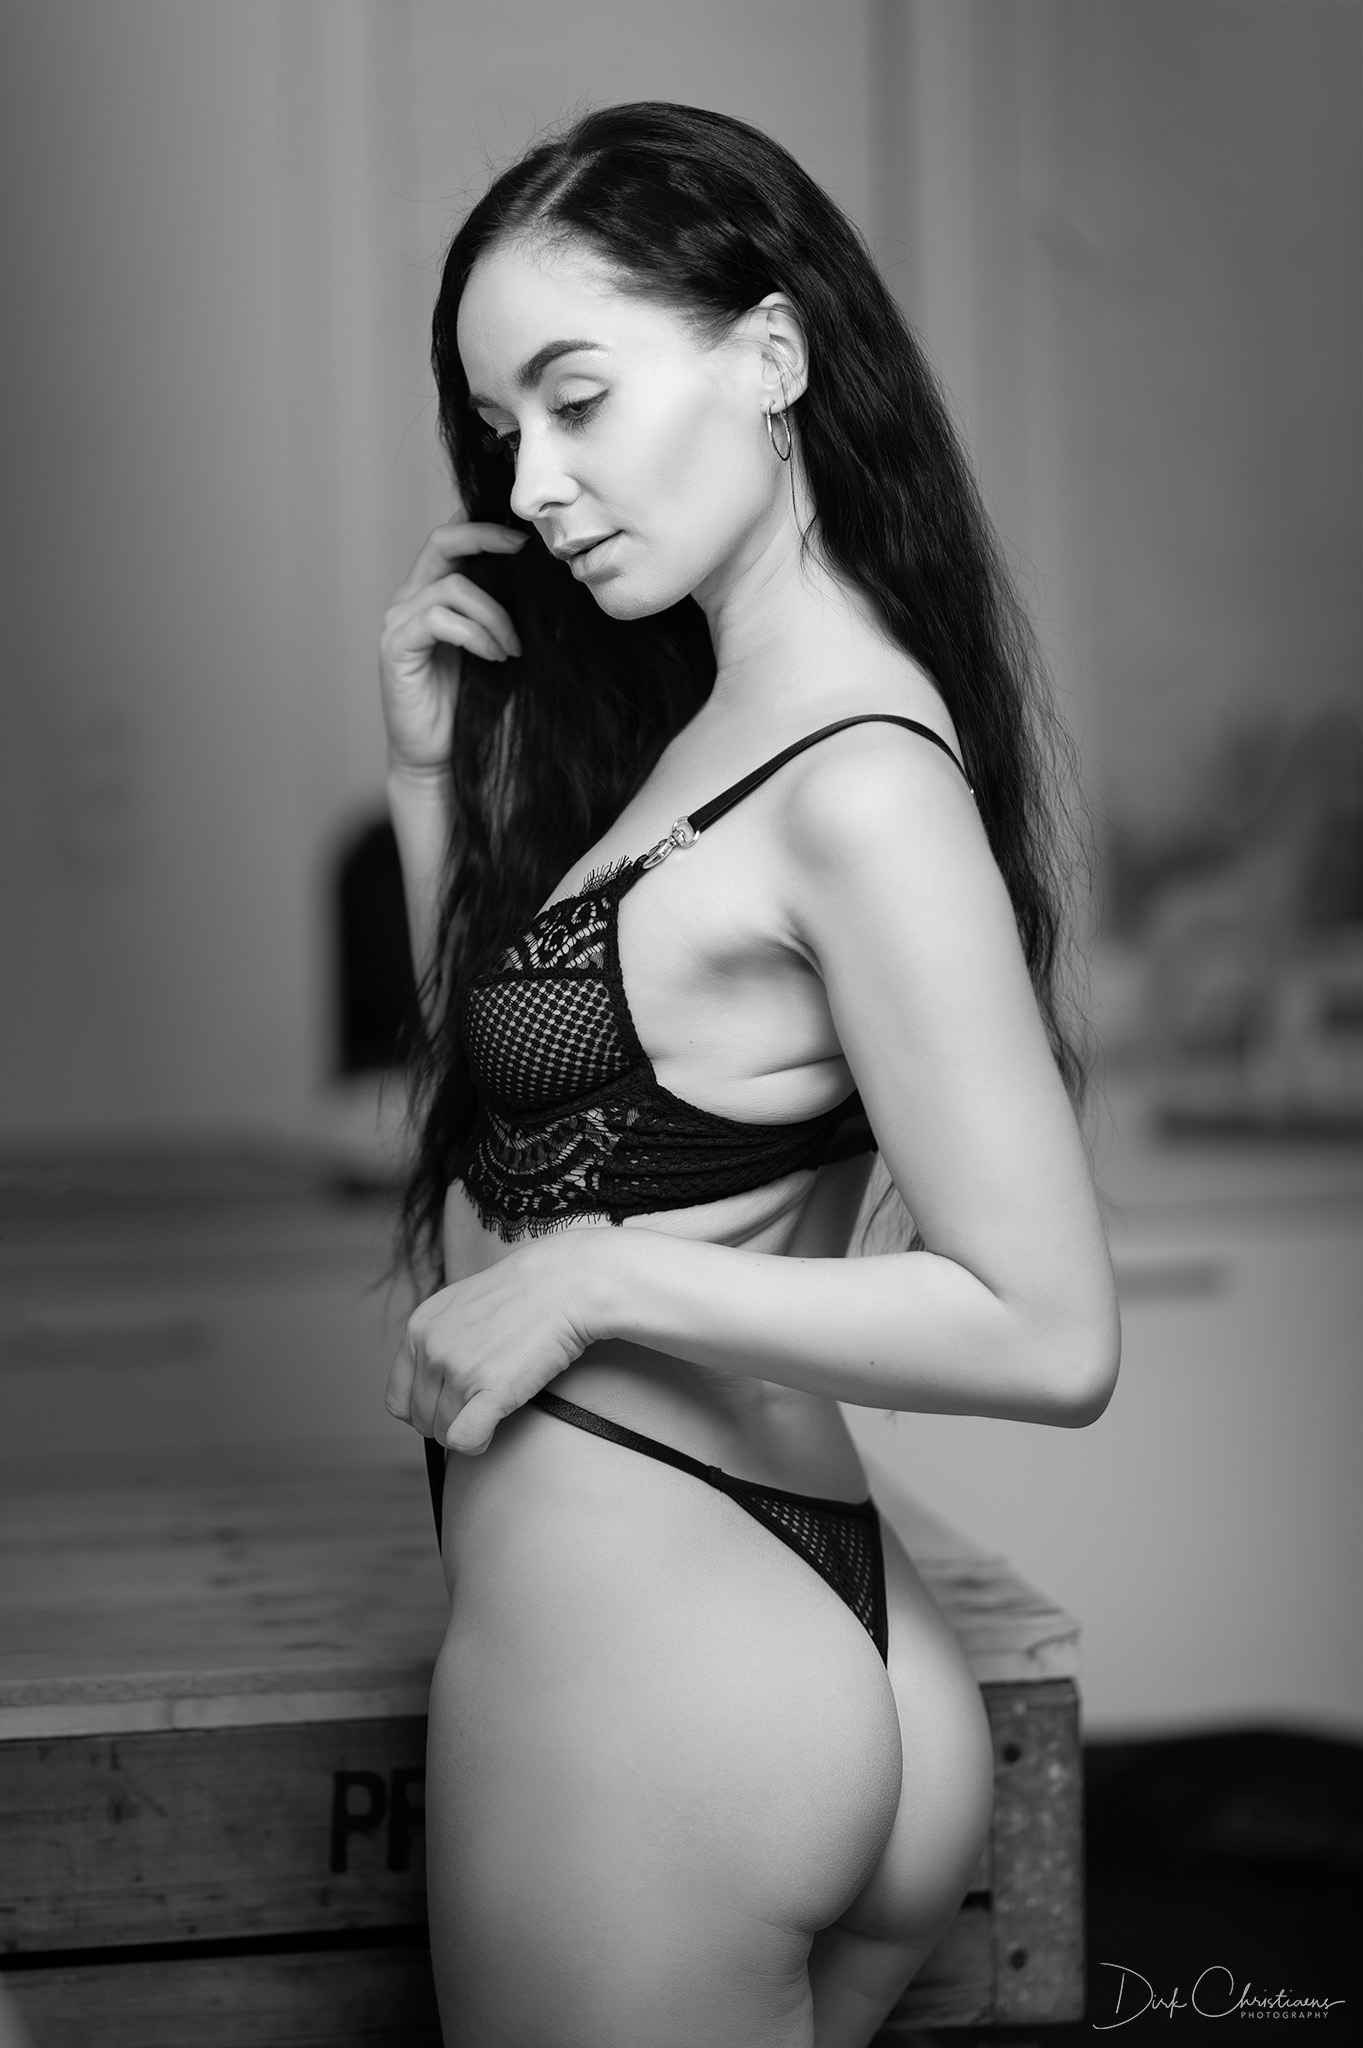 Isinka Luxova, model from Czech Republic at a boudoir photoshoot